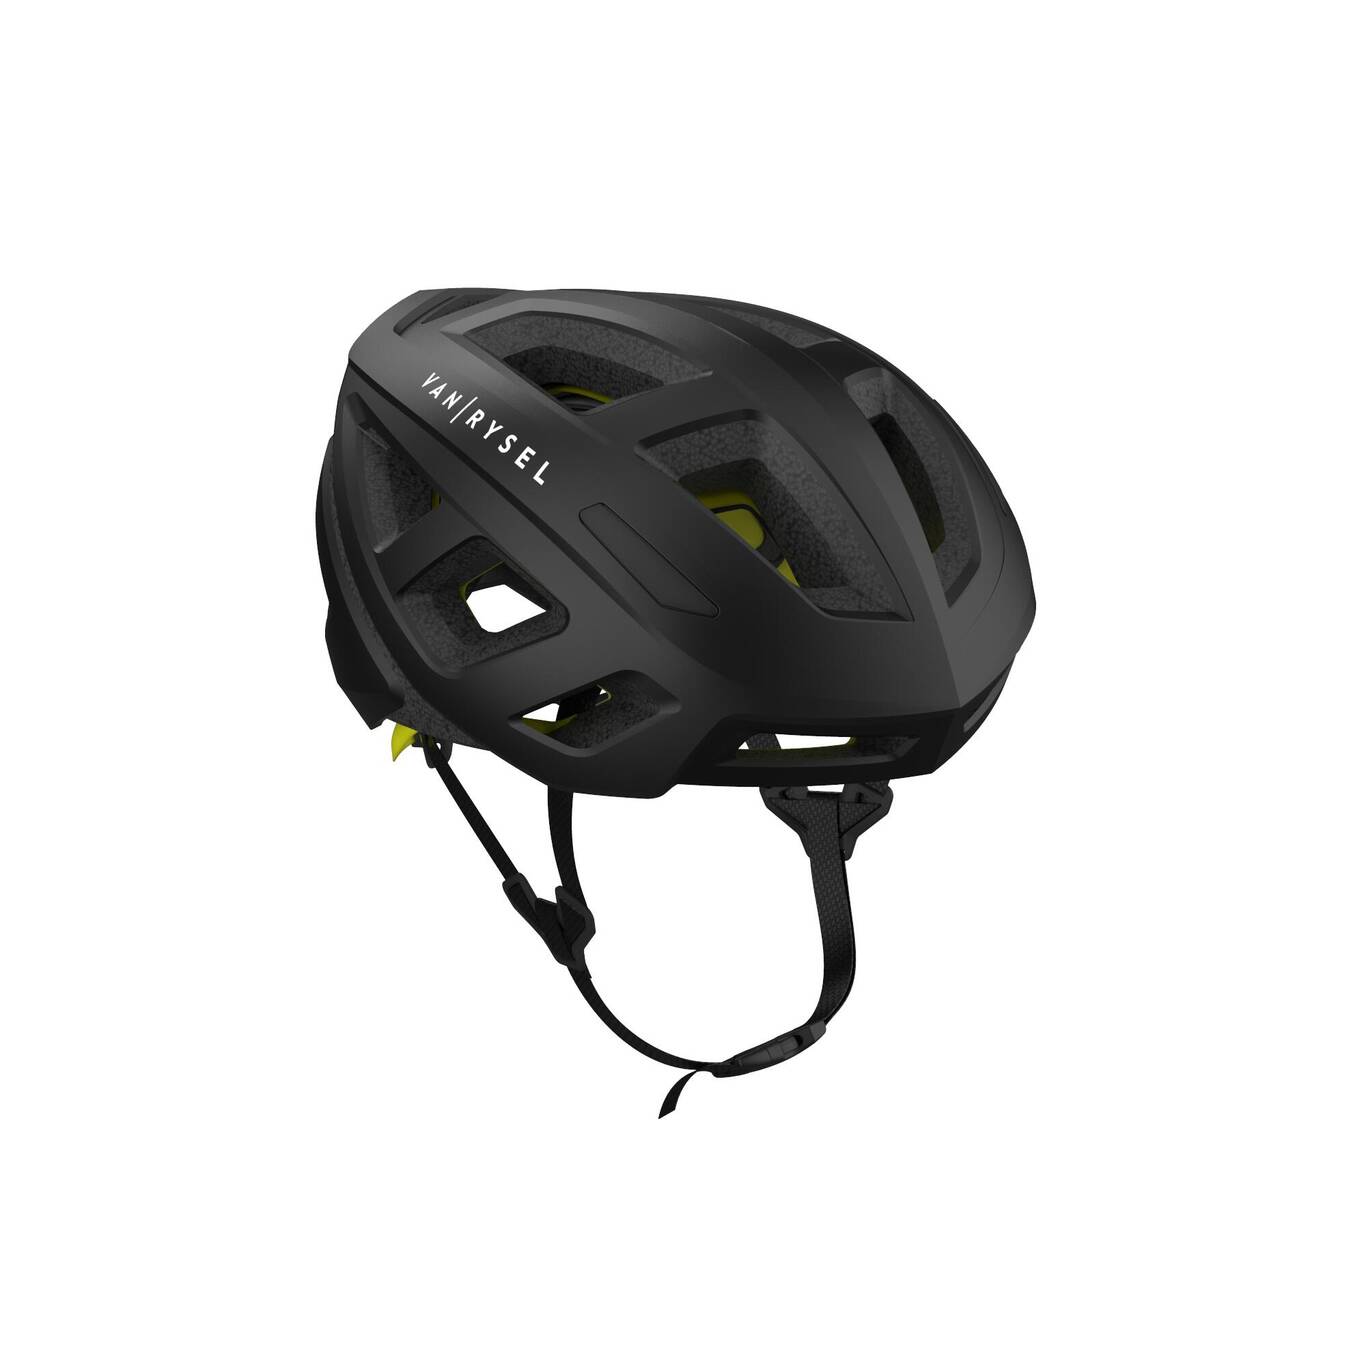 Helm Sepeda Balap RoadR 500 MIPS - Hitam